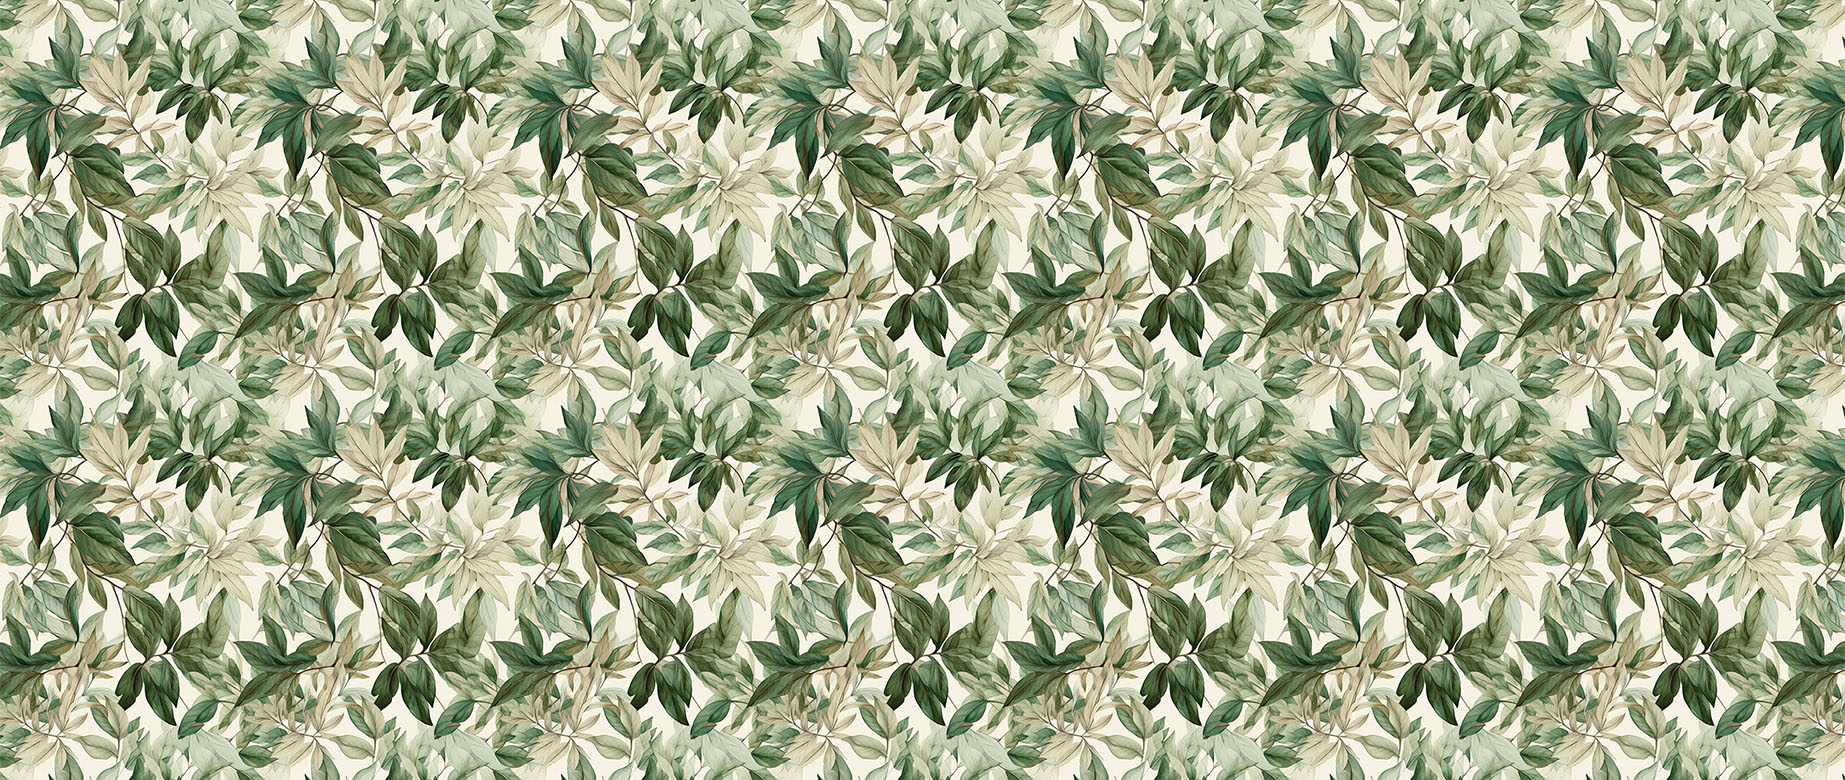 white-green-long-leaves-on-stem-wallpaper-wide-view